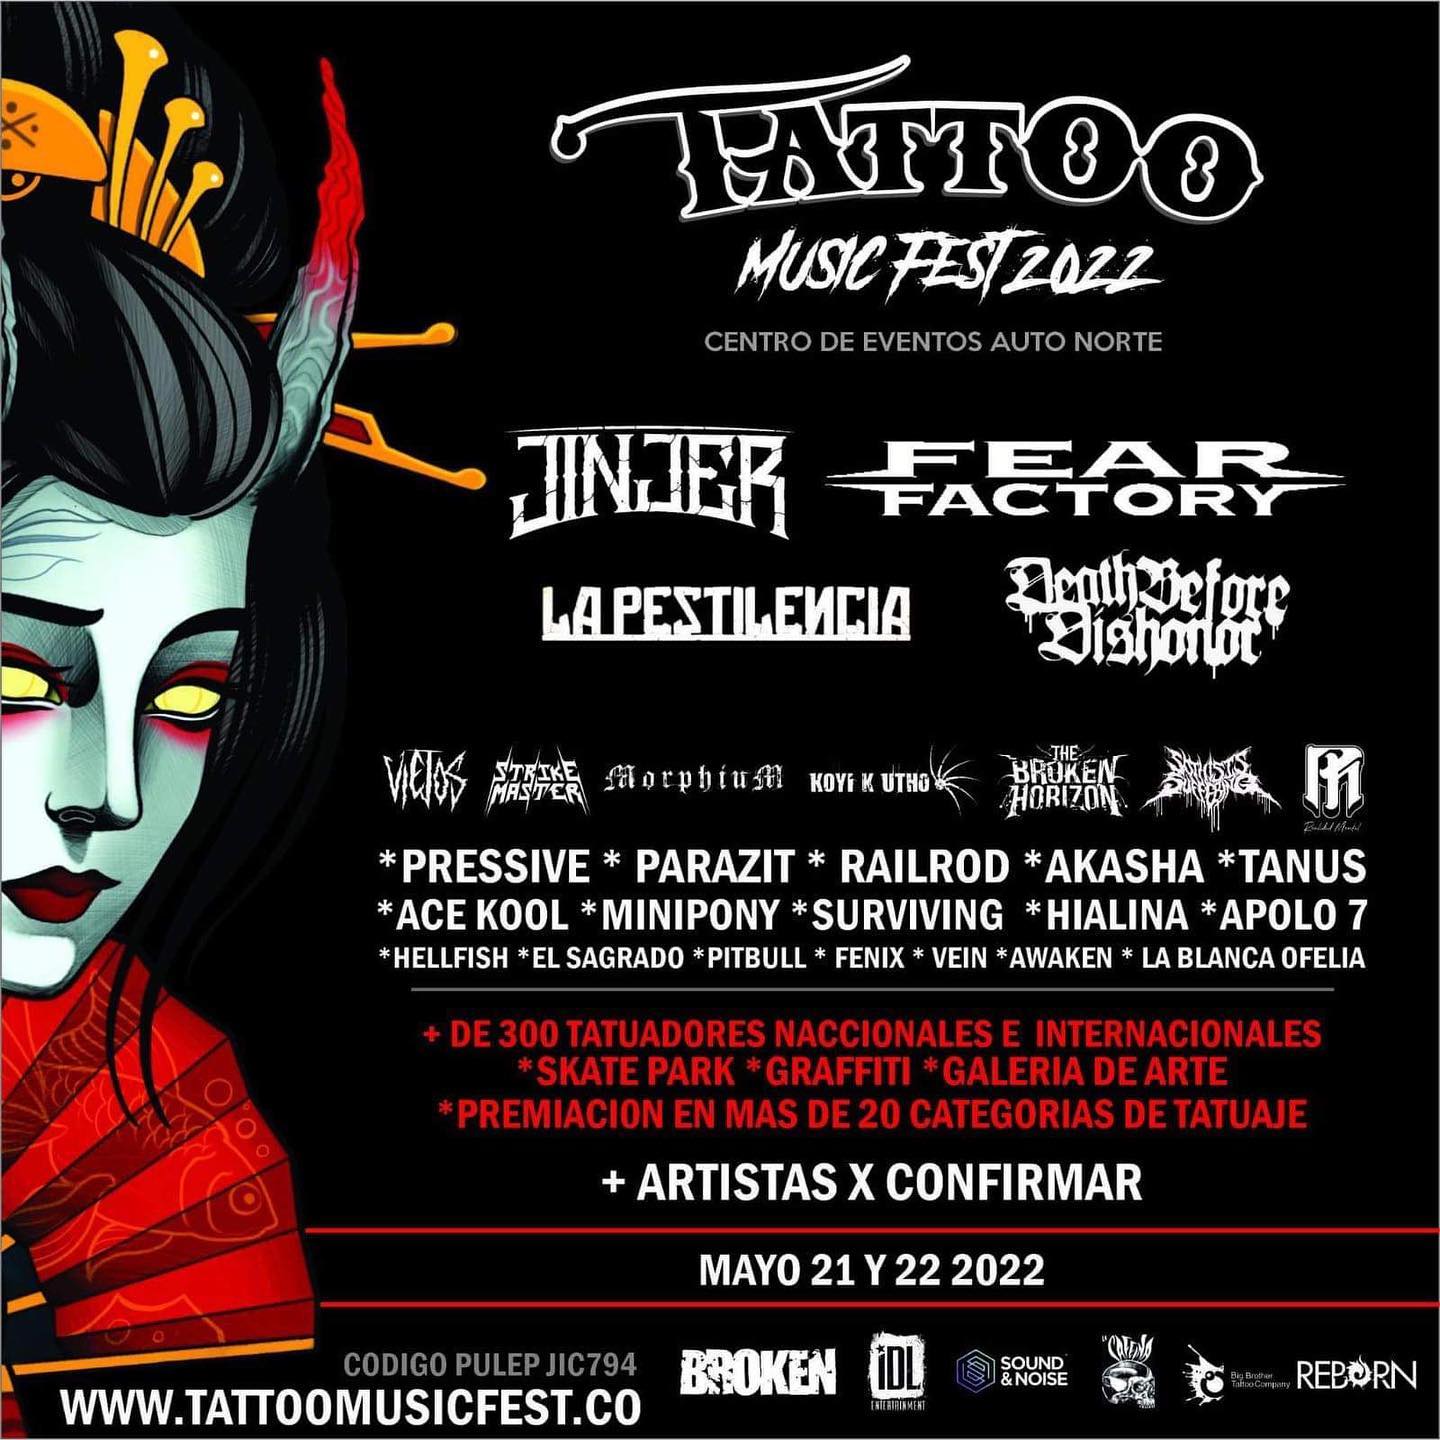 Tattoo Music Fest in Bogota Colombia